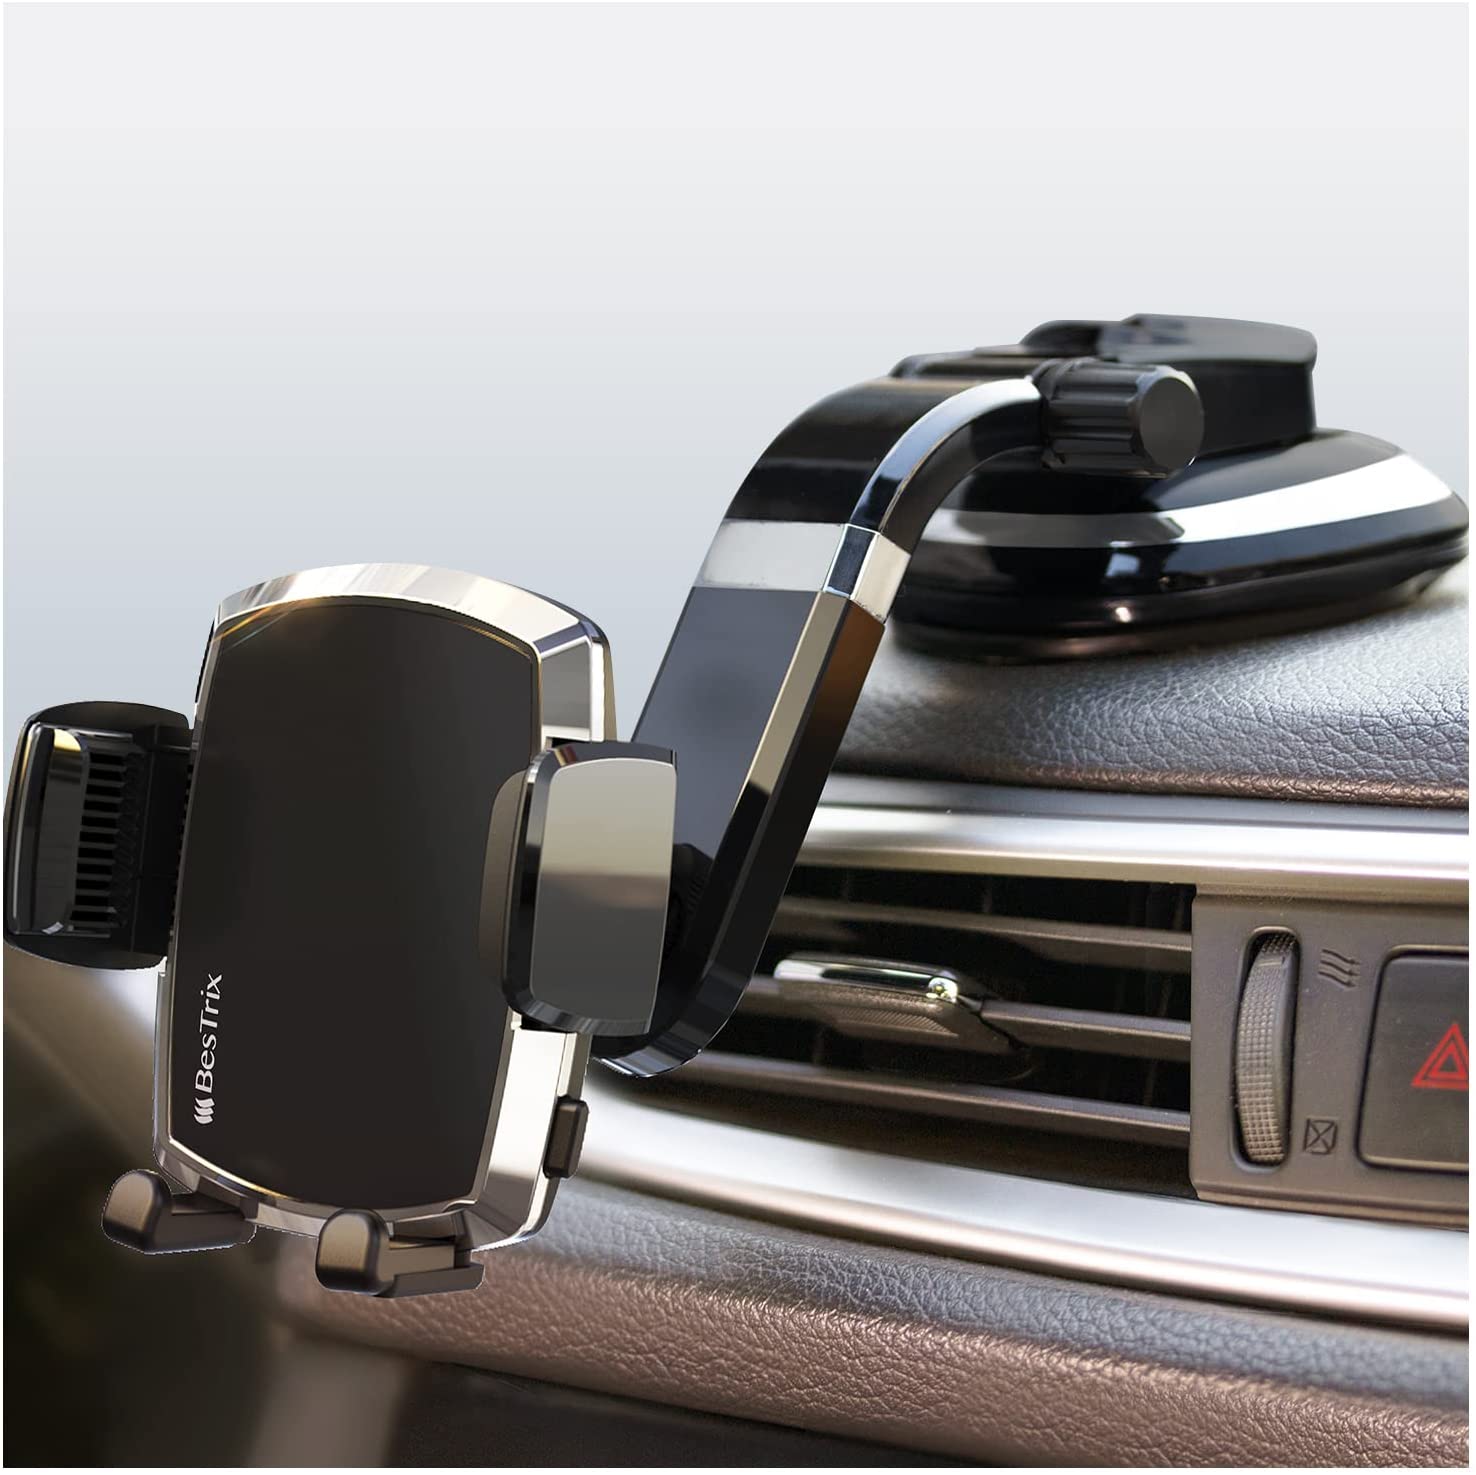 BESTRIX Phone Holder for Car, SmartClamp Car Phone Mount